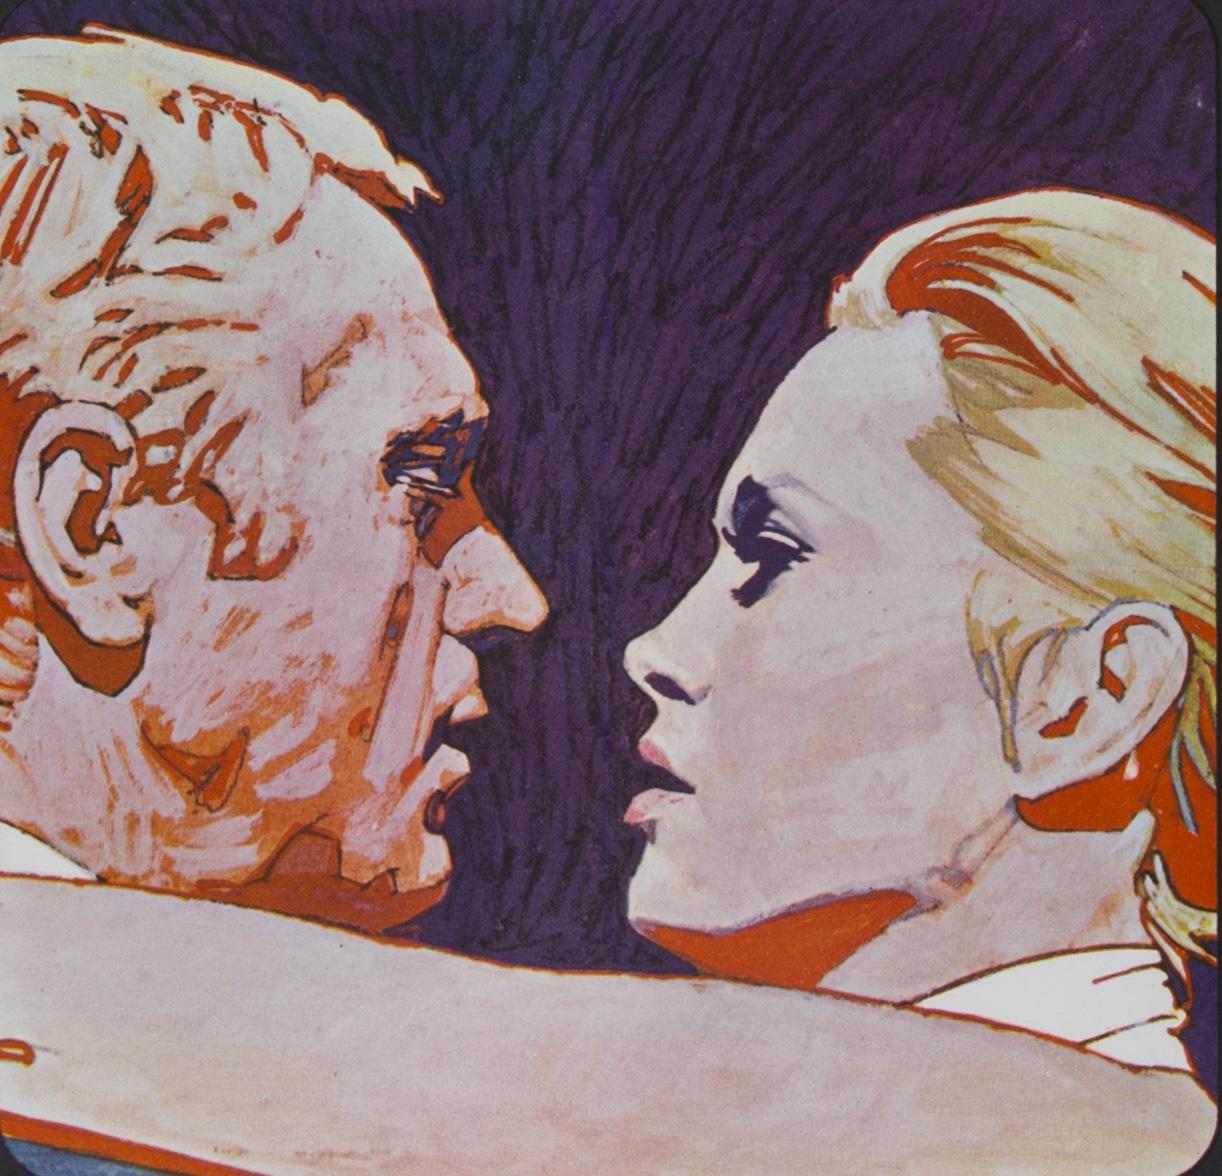 Paper Thomas Crown Affair, British UK Film Poster, 1968, Arnaldo Putzu